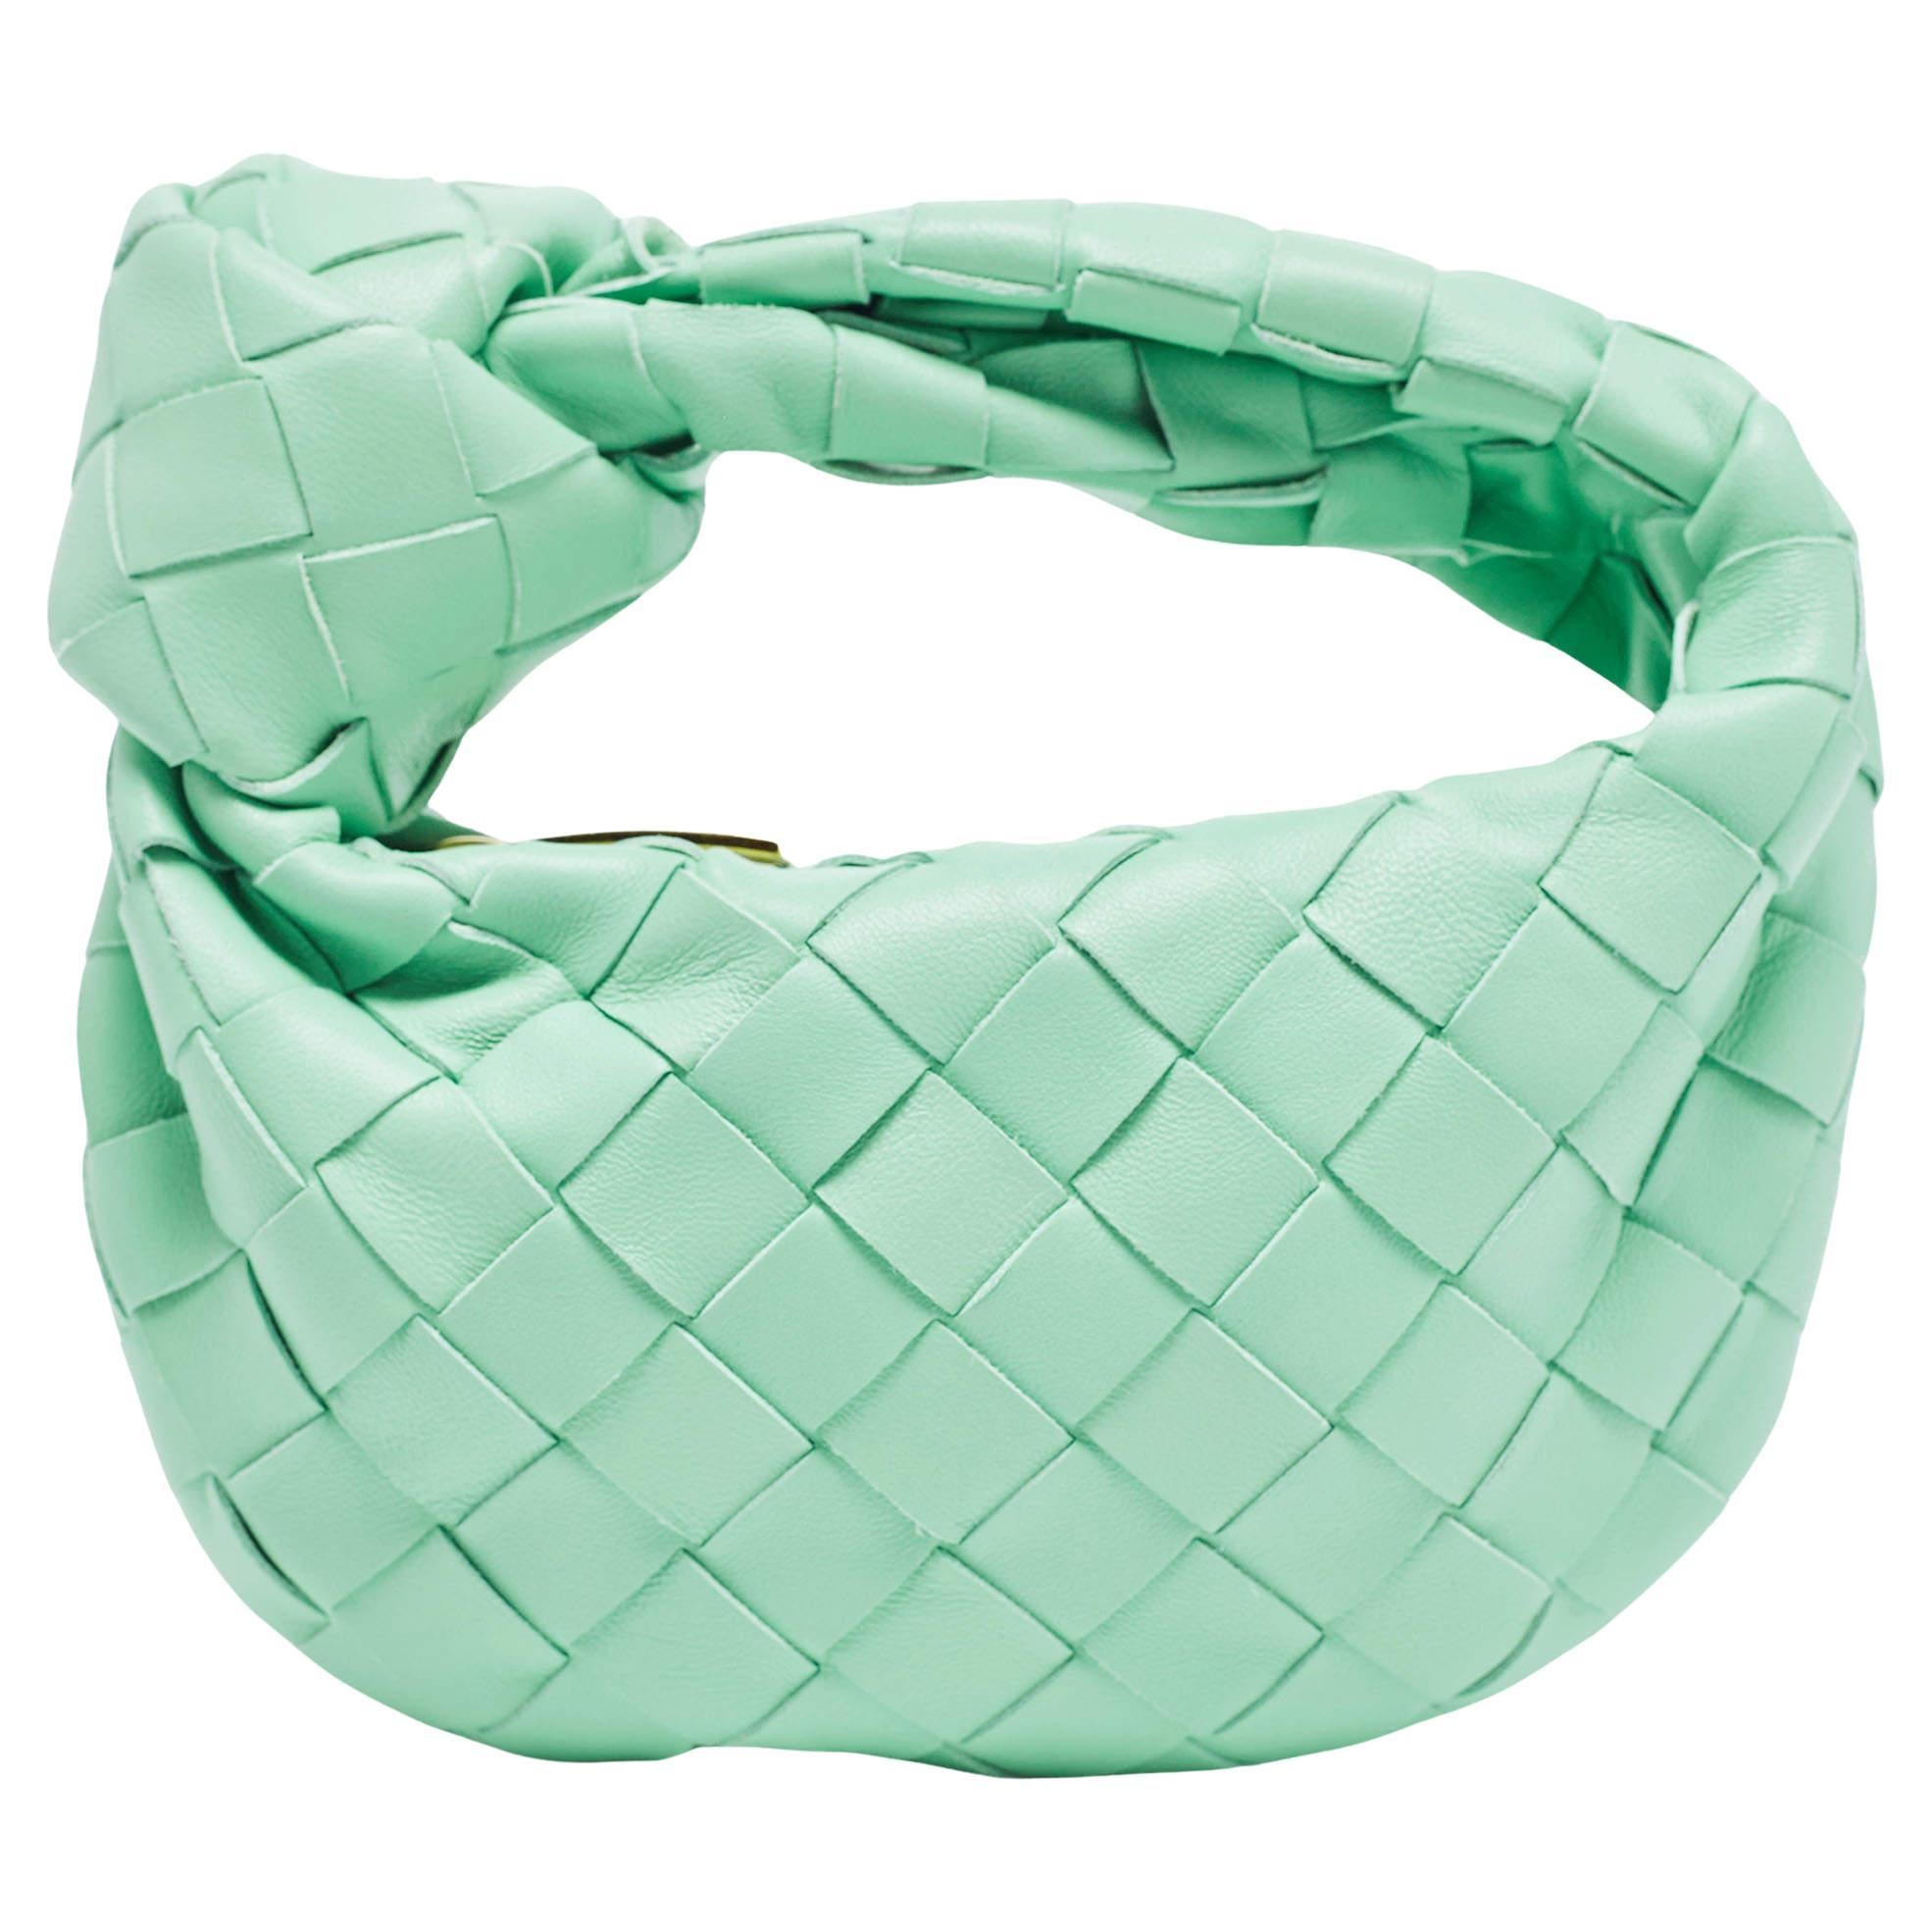 Bottega Veneta Mint Green Intrecciato Leather Candy Jodie Bag